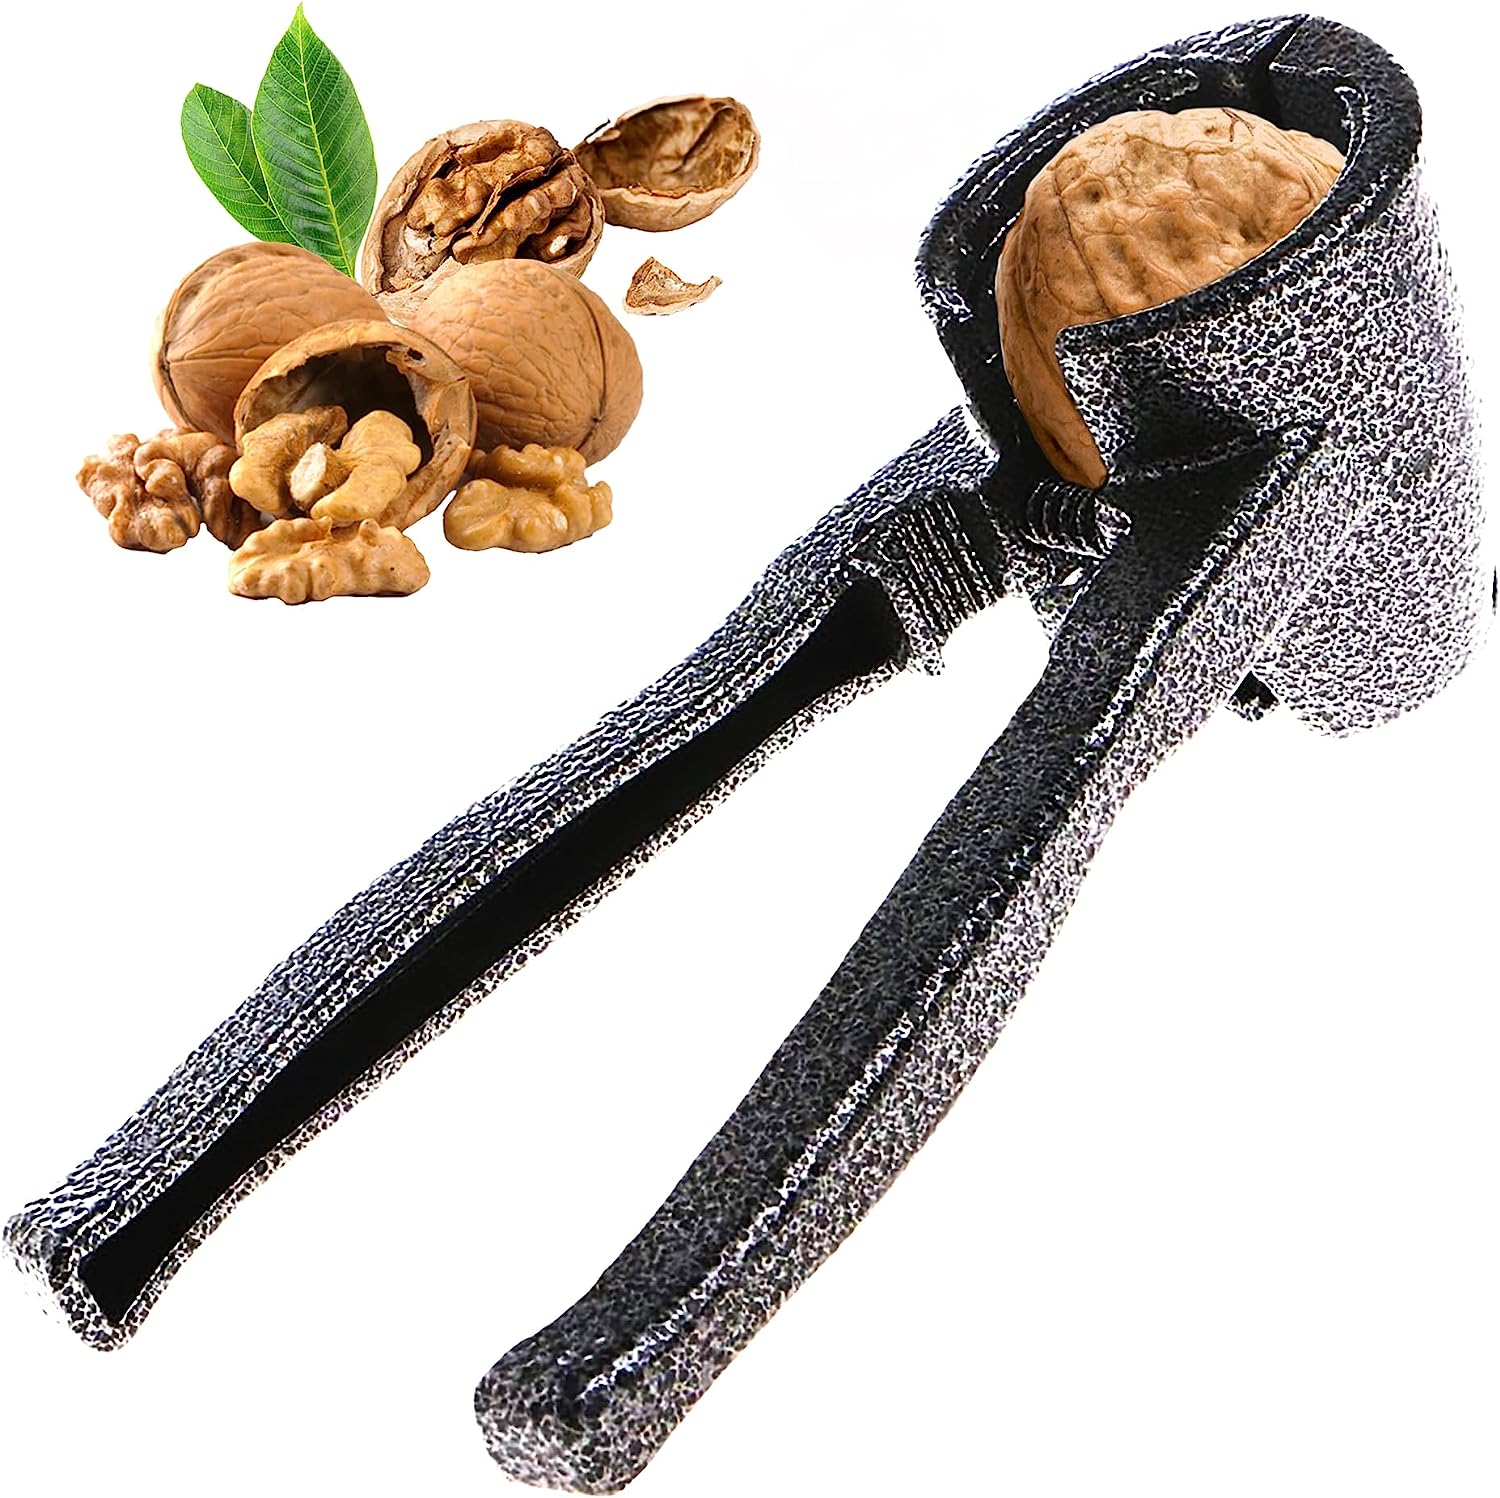 Stainless Steel Nut Cracker Tool - Crack Nuts Easily